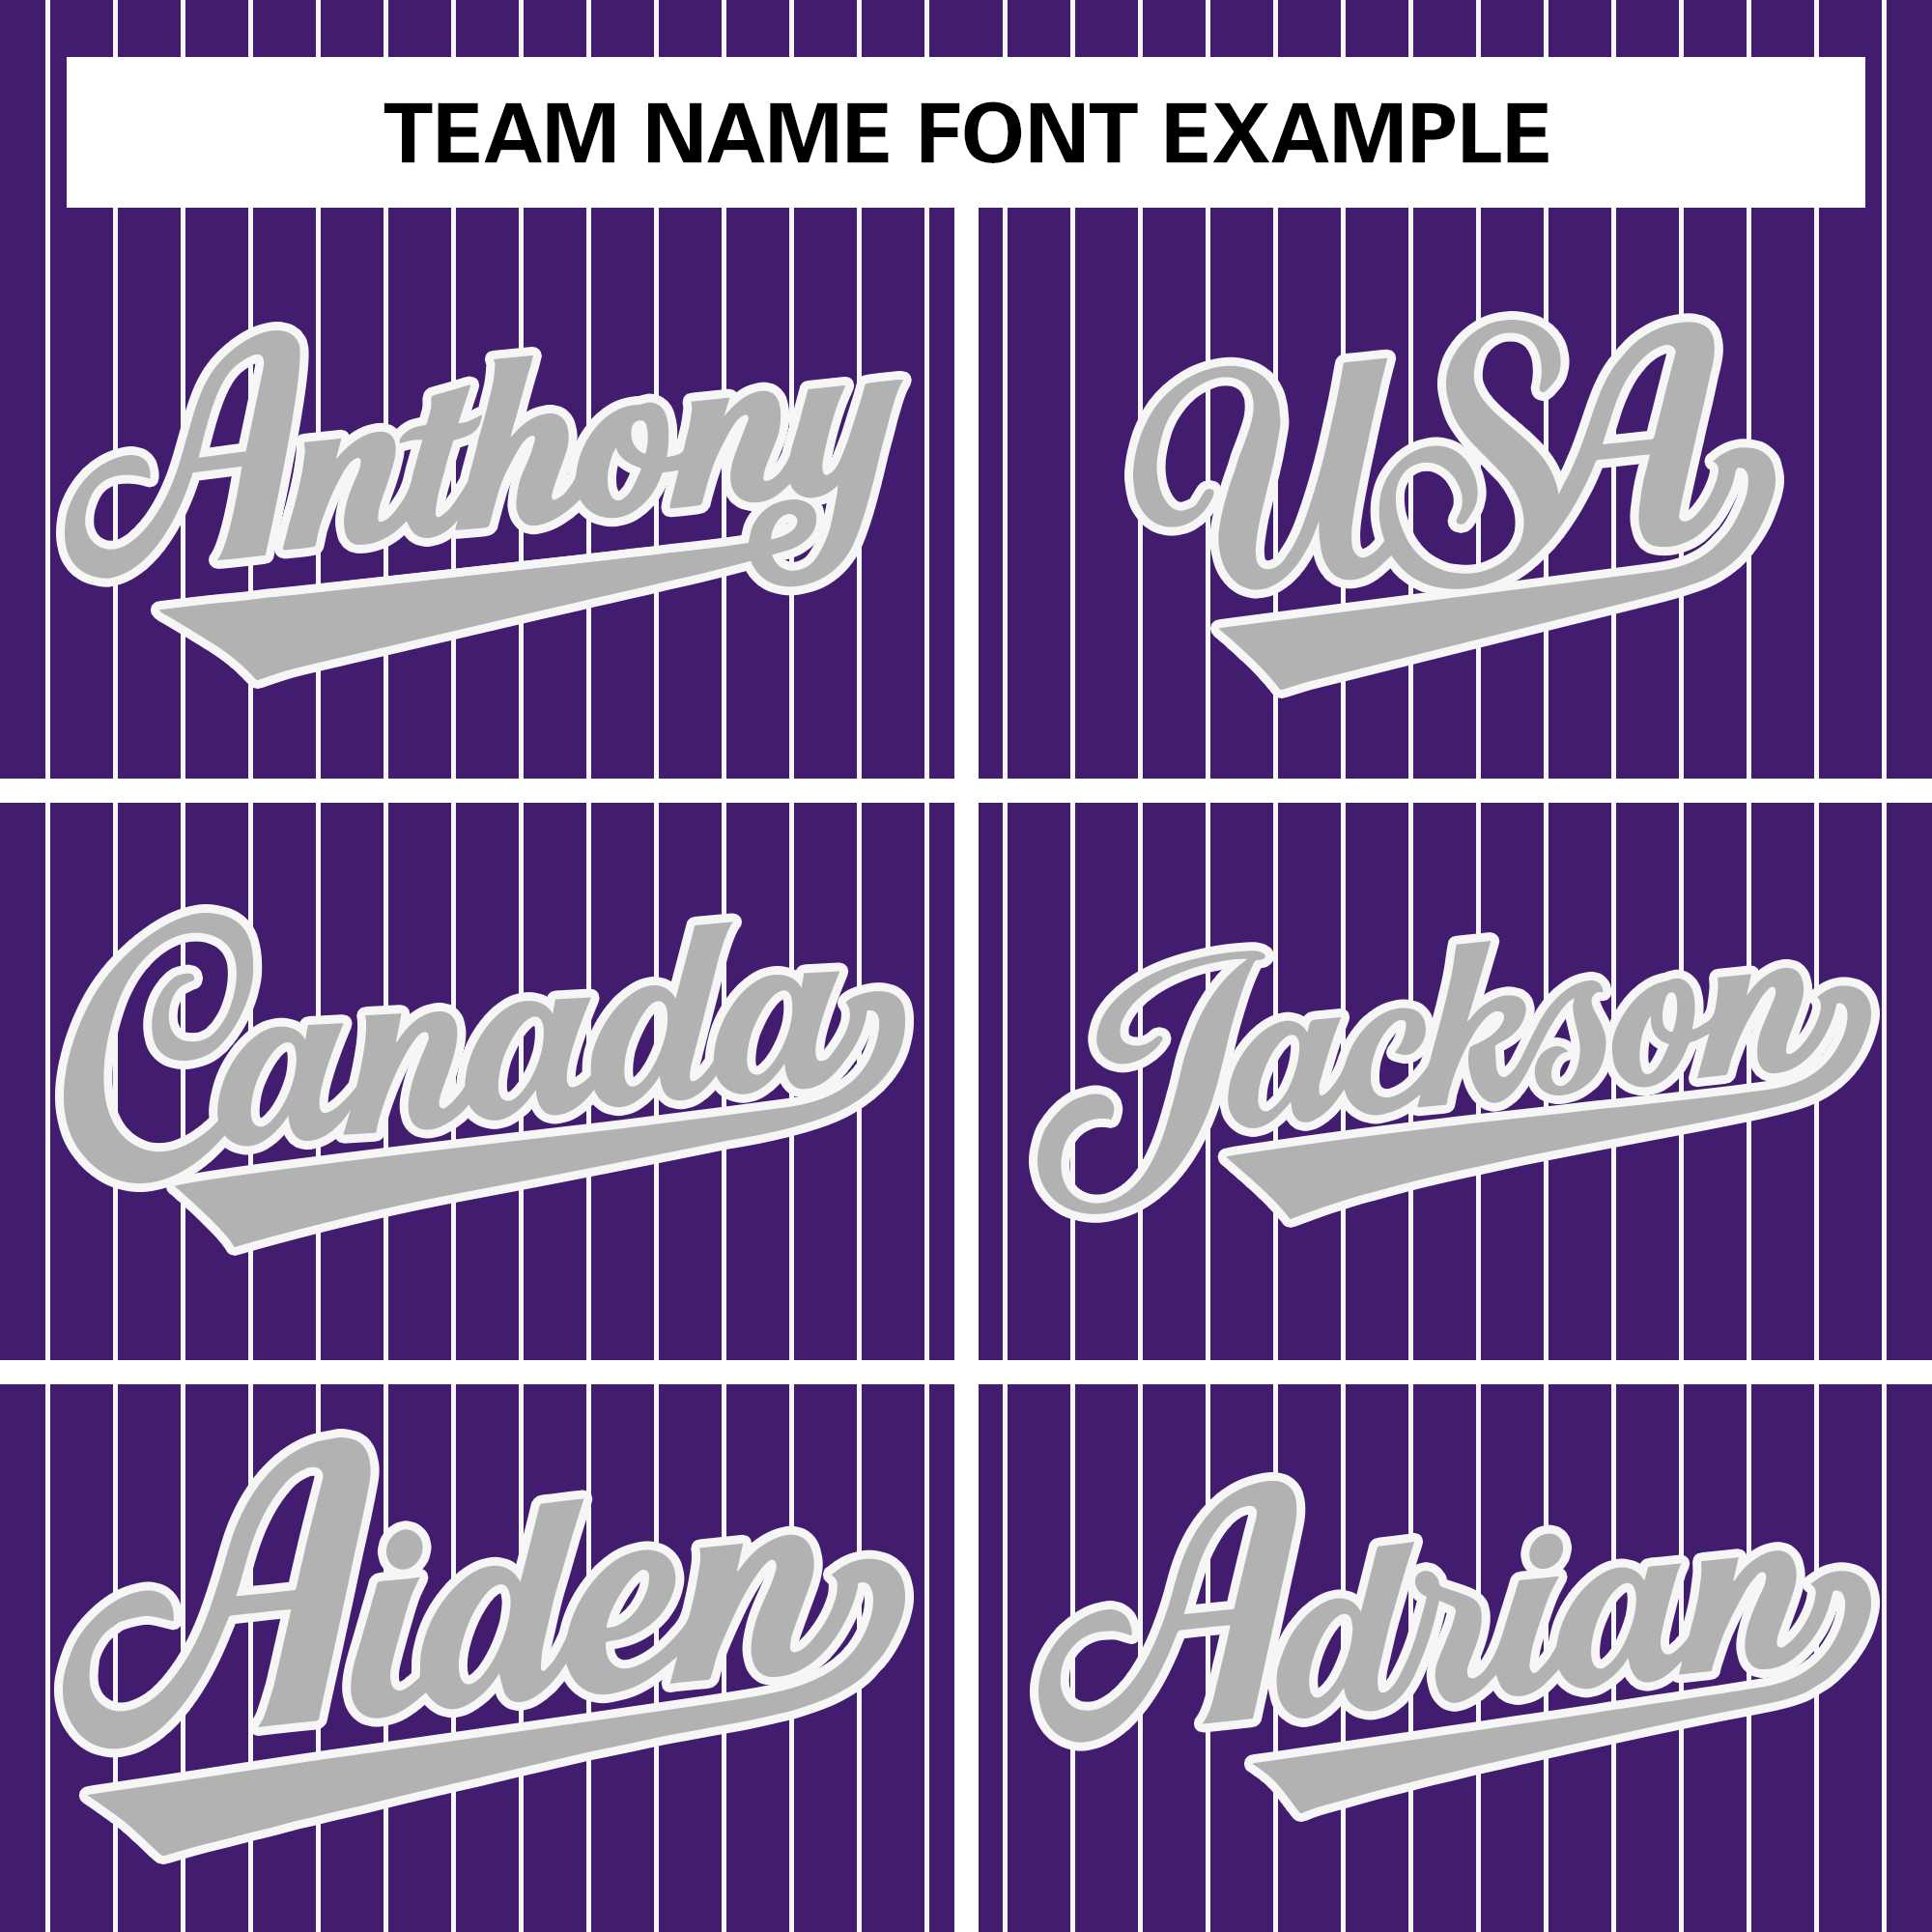 pinstripe full button jerseys team name font